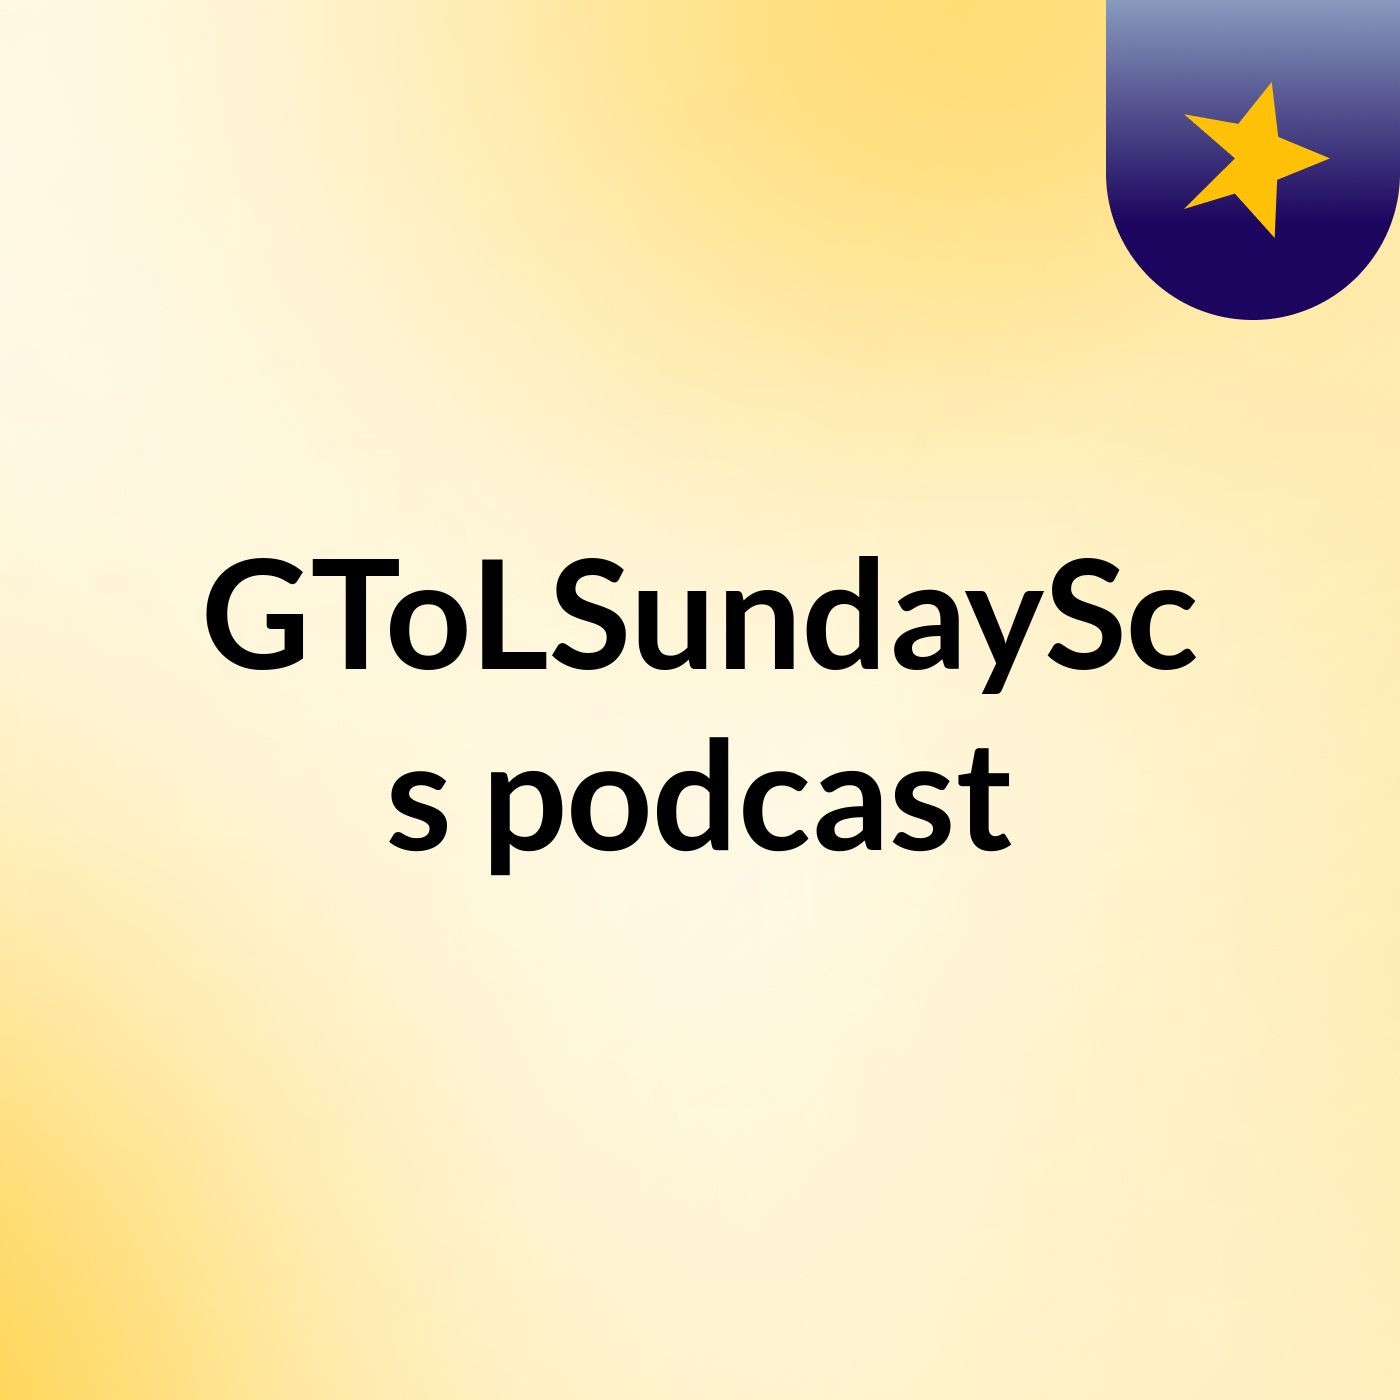 Episode 2 - RCCGToLSundaySchool's podcast